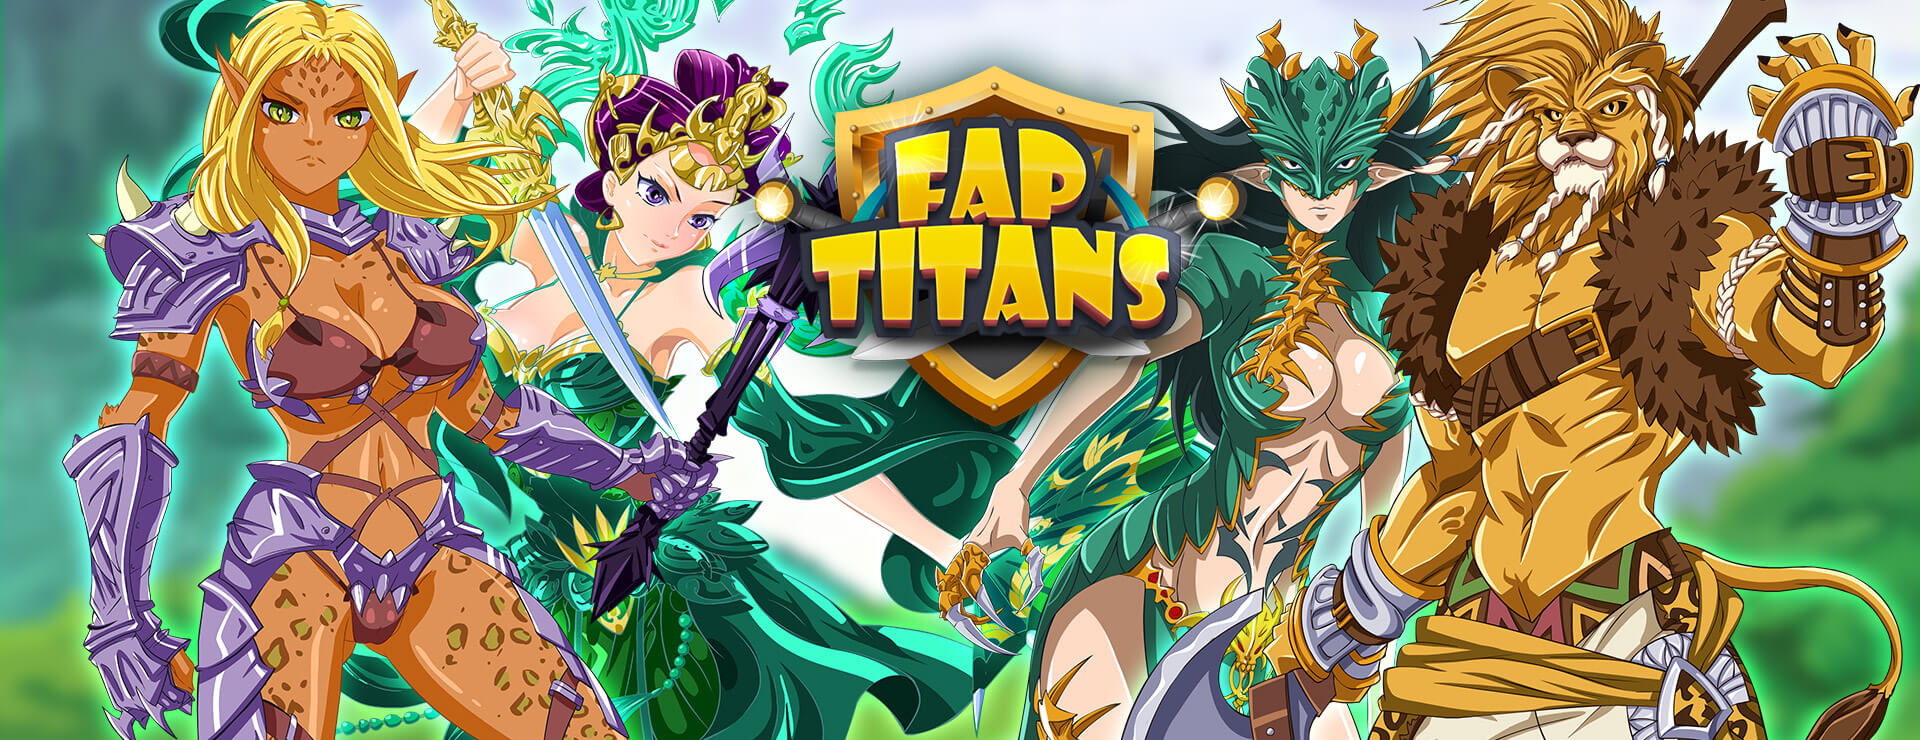 Fap Titans Game - カジュアル ゲーム